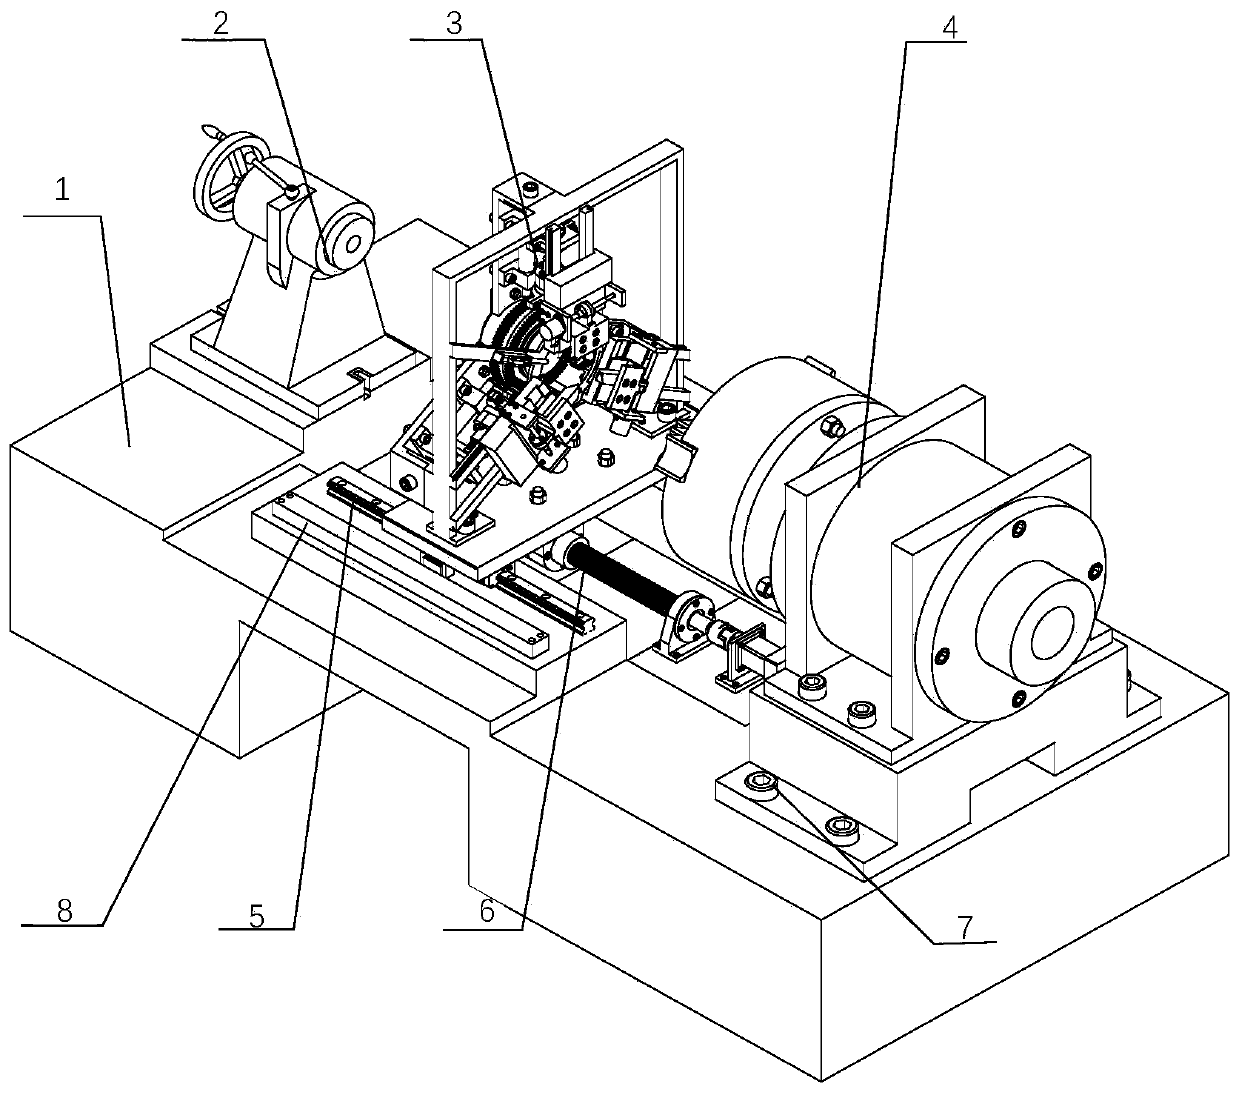 Multi-tool efficient synchronous dynamic balance turning machine tool and machining method